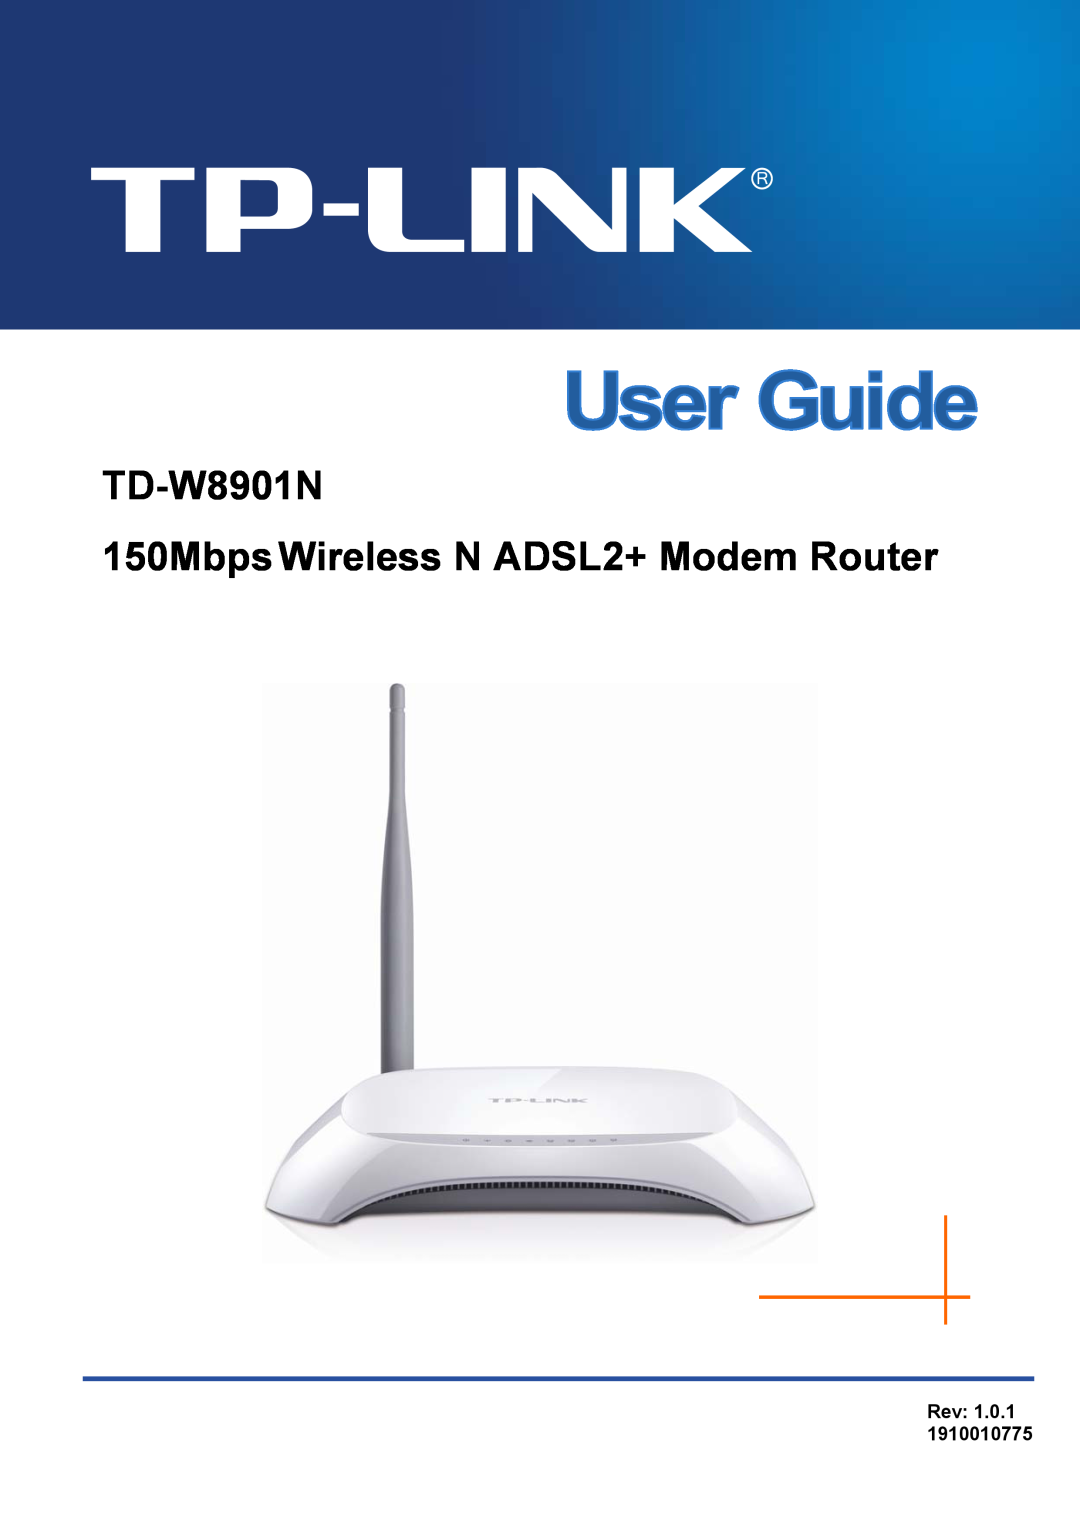 TP-Link manual TD-W8901N 150Mbps Wireless N ADSL2+ Modem Router, Rev 1.0.1 